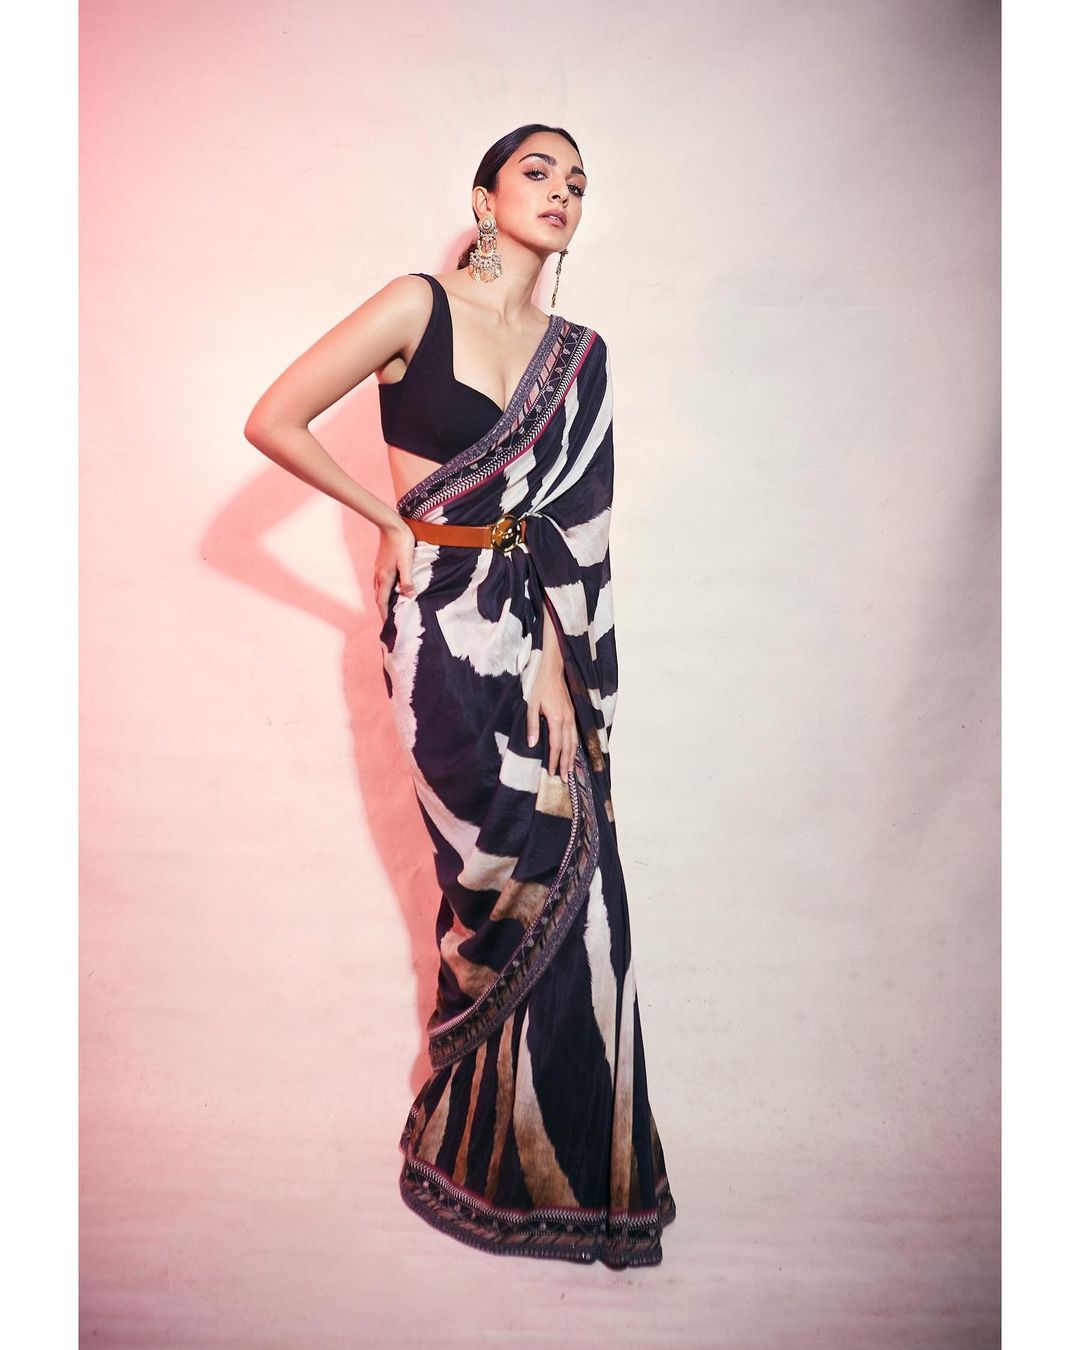 Kiara Advani looks flawless in the black and white chiffon saree